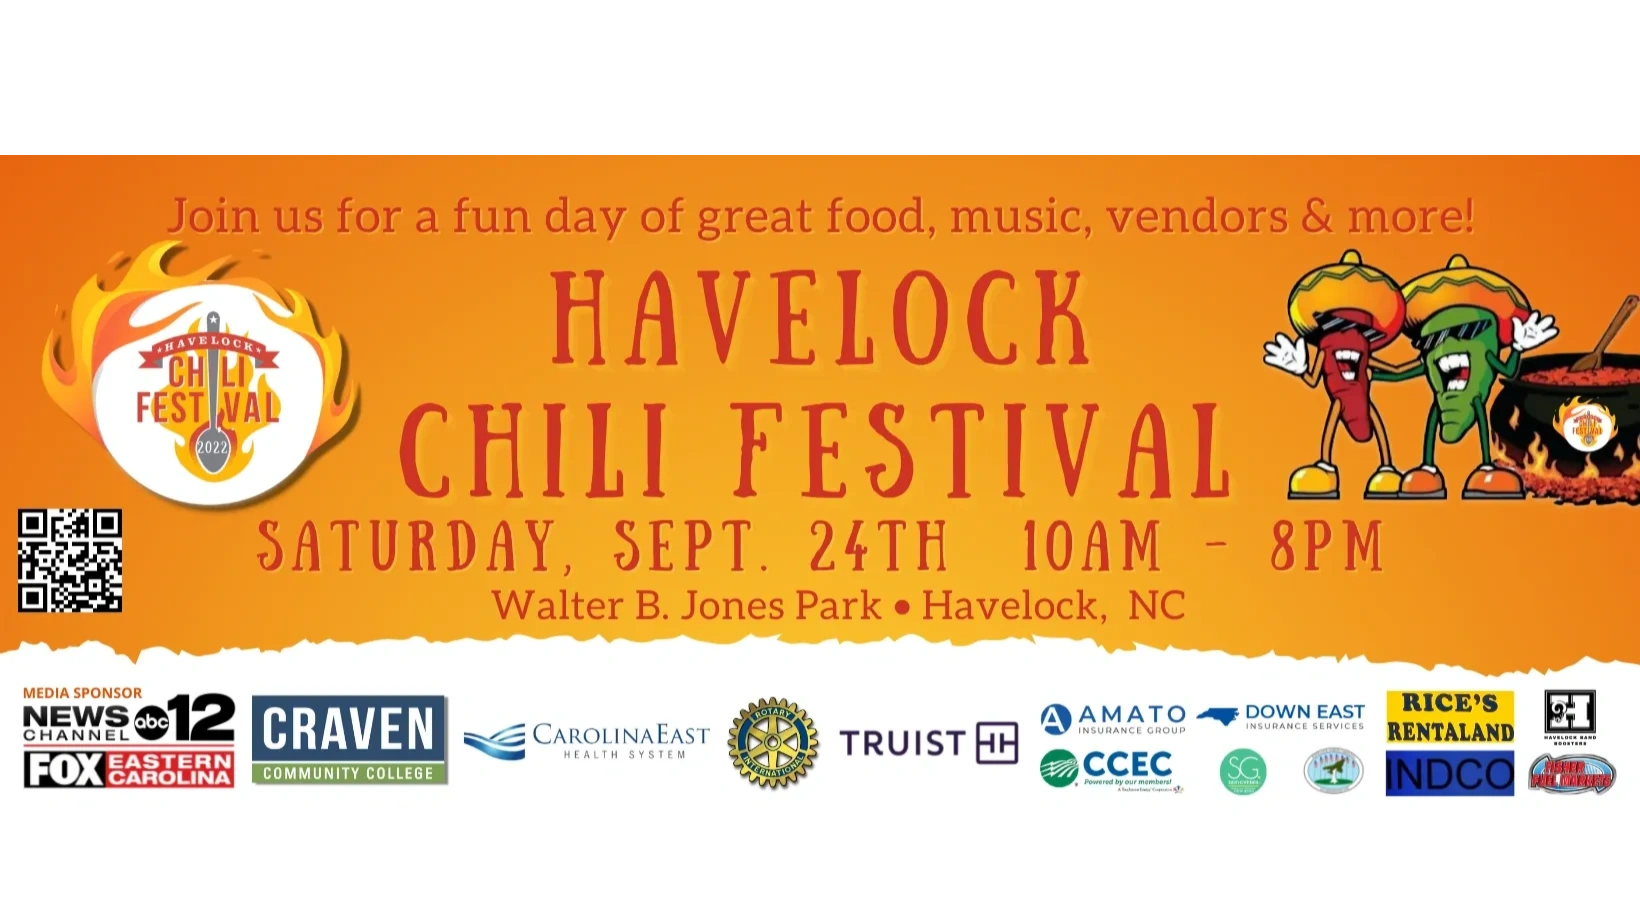 Havelock Chili Festival